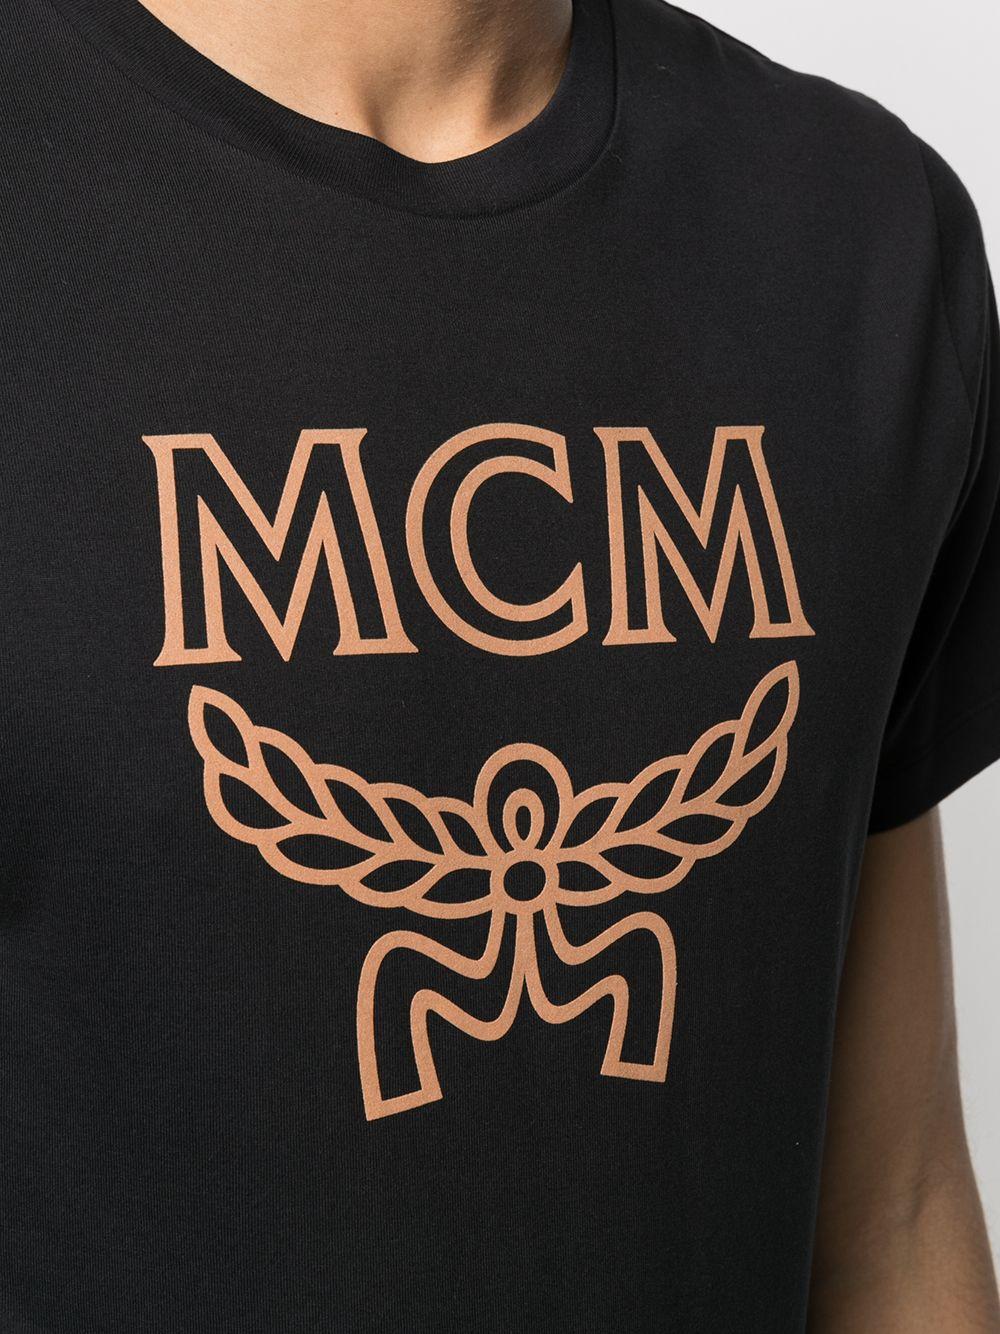 MCM Cotton Logo-print T-shirt in Black for Men - Lyst